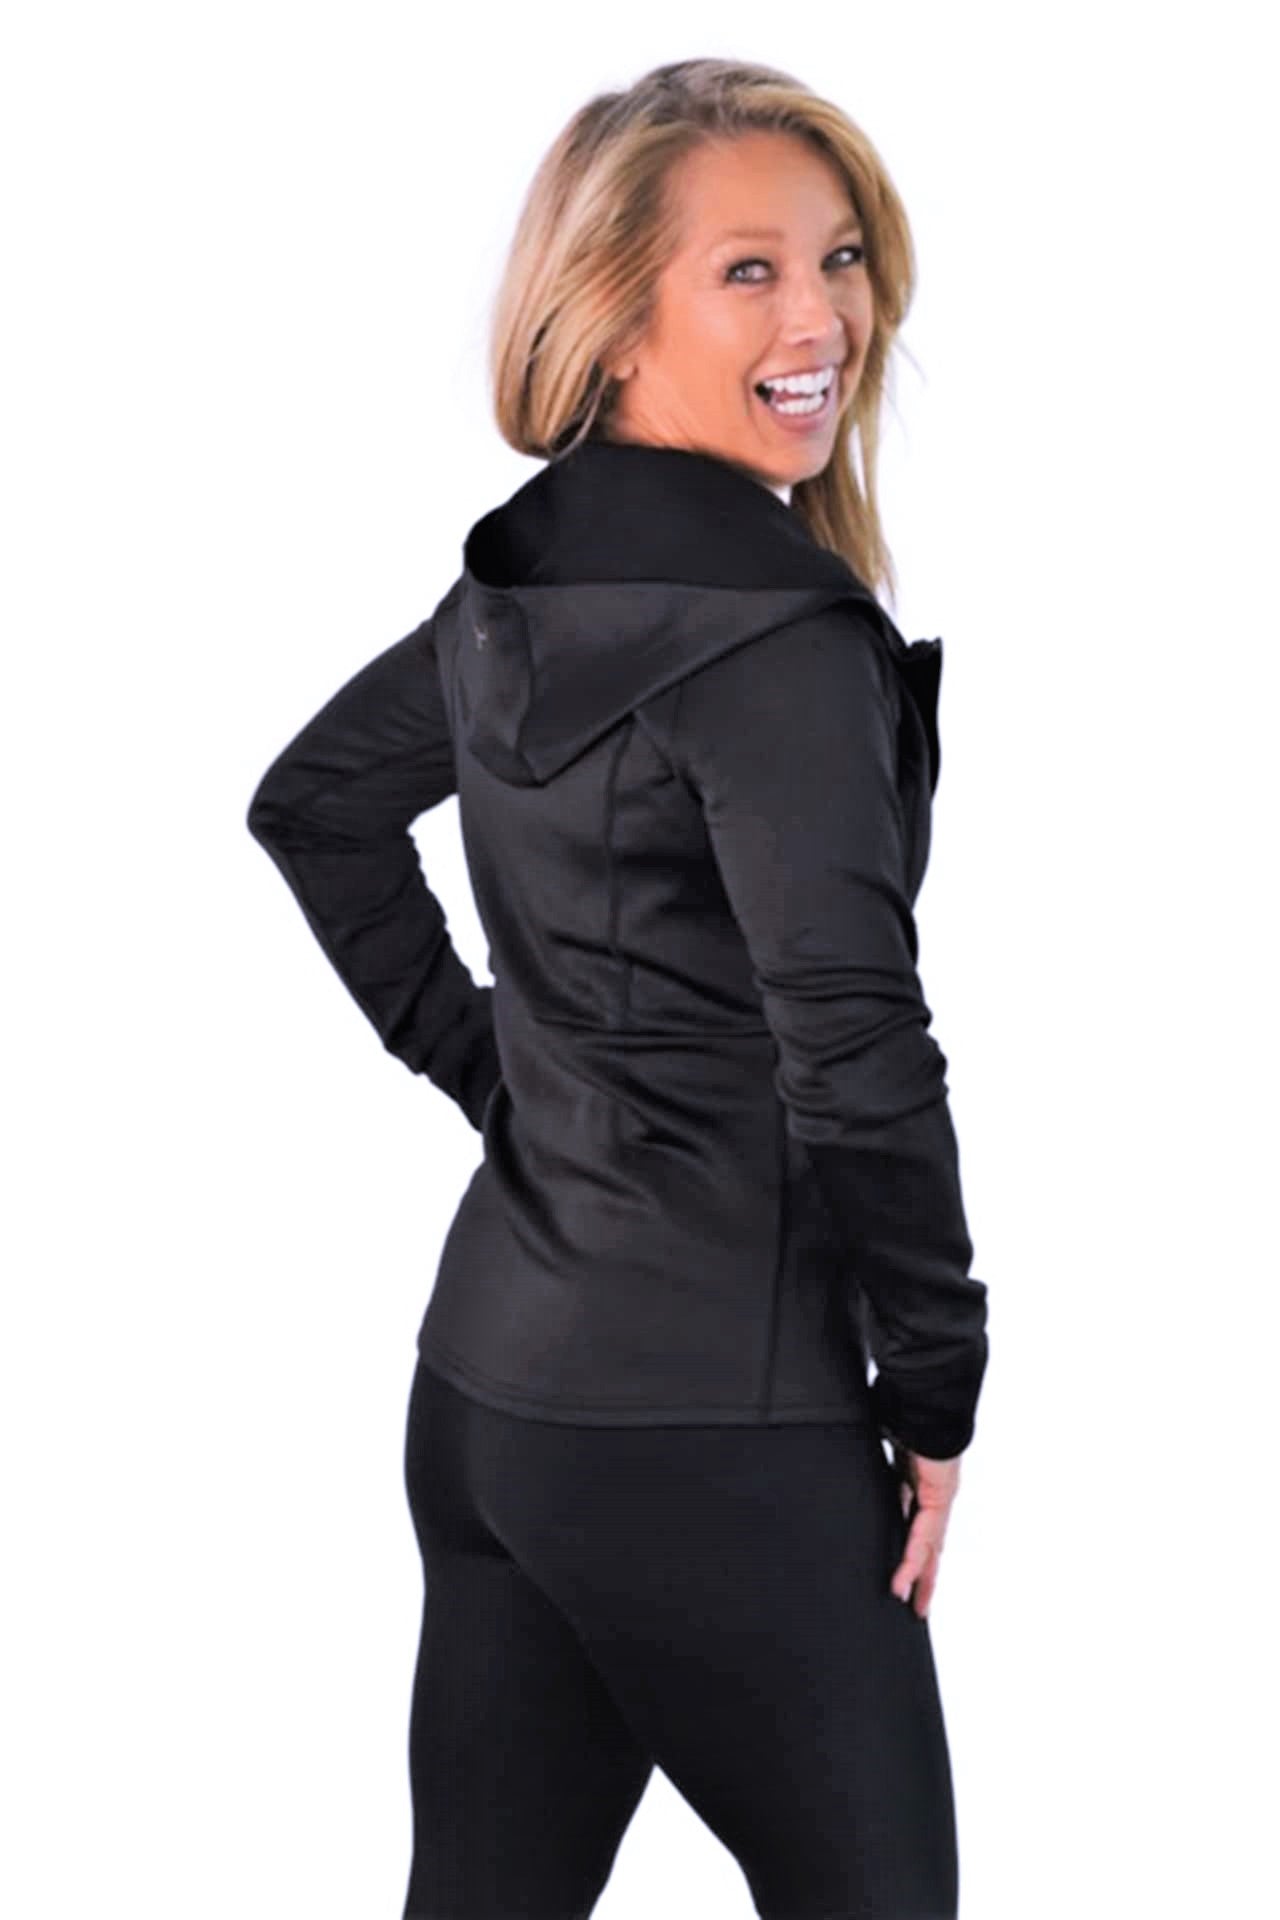 Snow Style Shop Denise Austin's Full Zip Workout Sports Jacket - Zipper Lightweight Black Hoodie MD